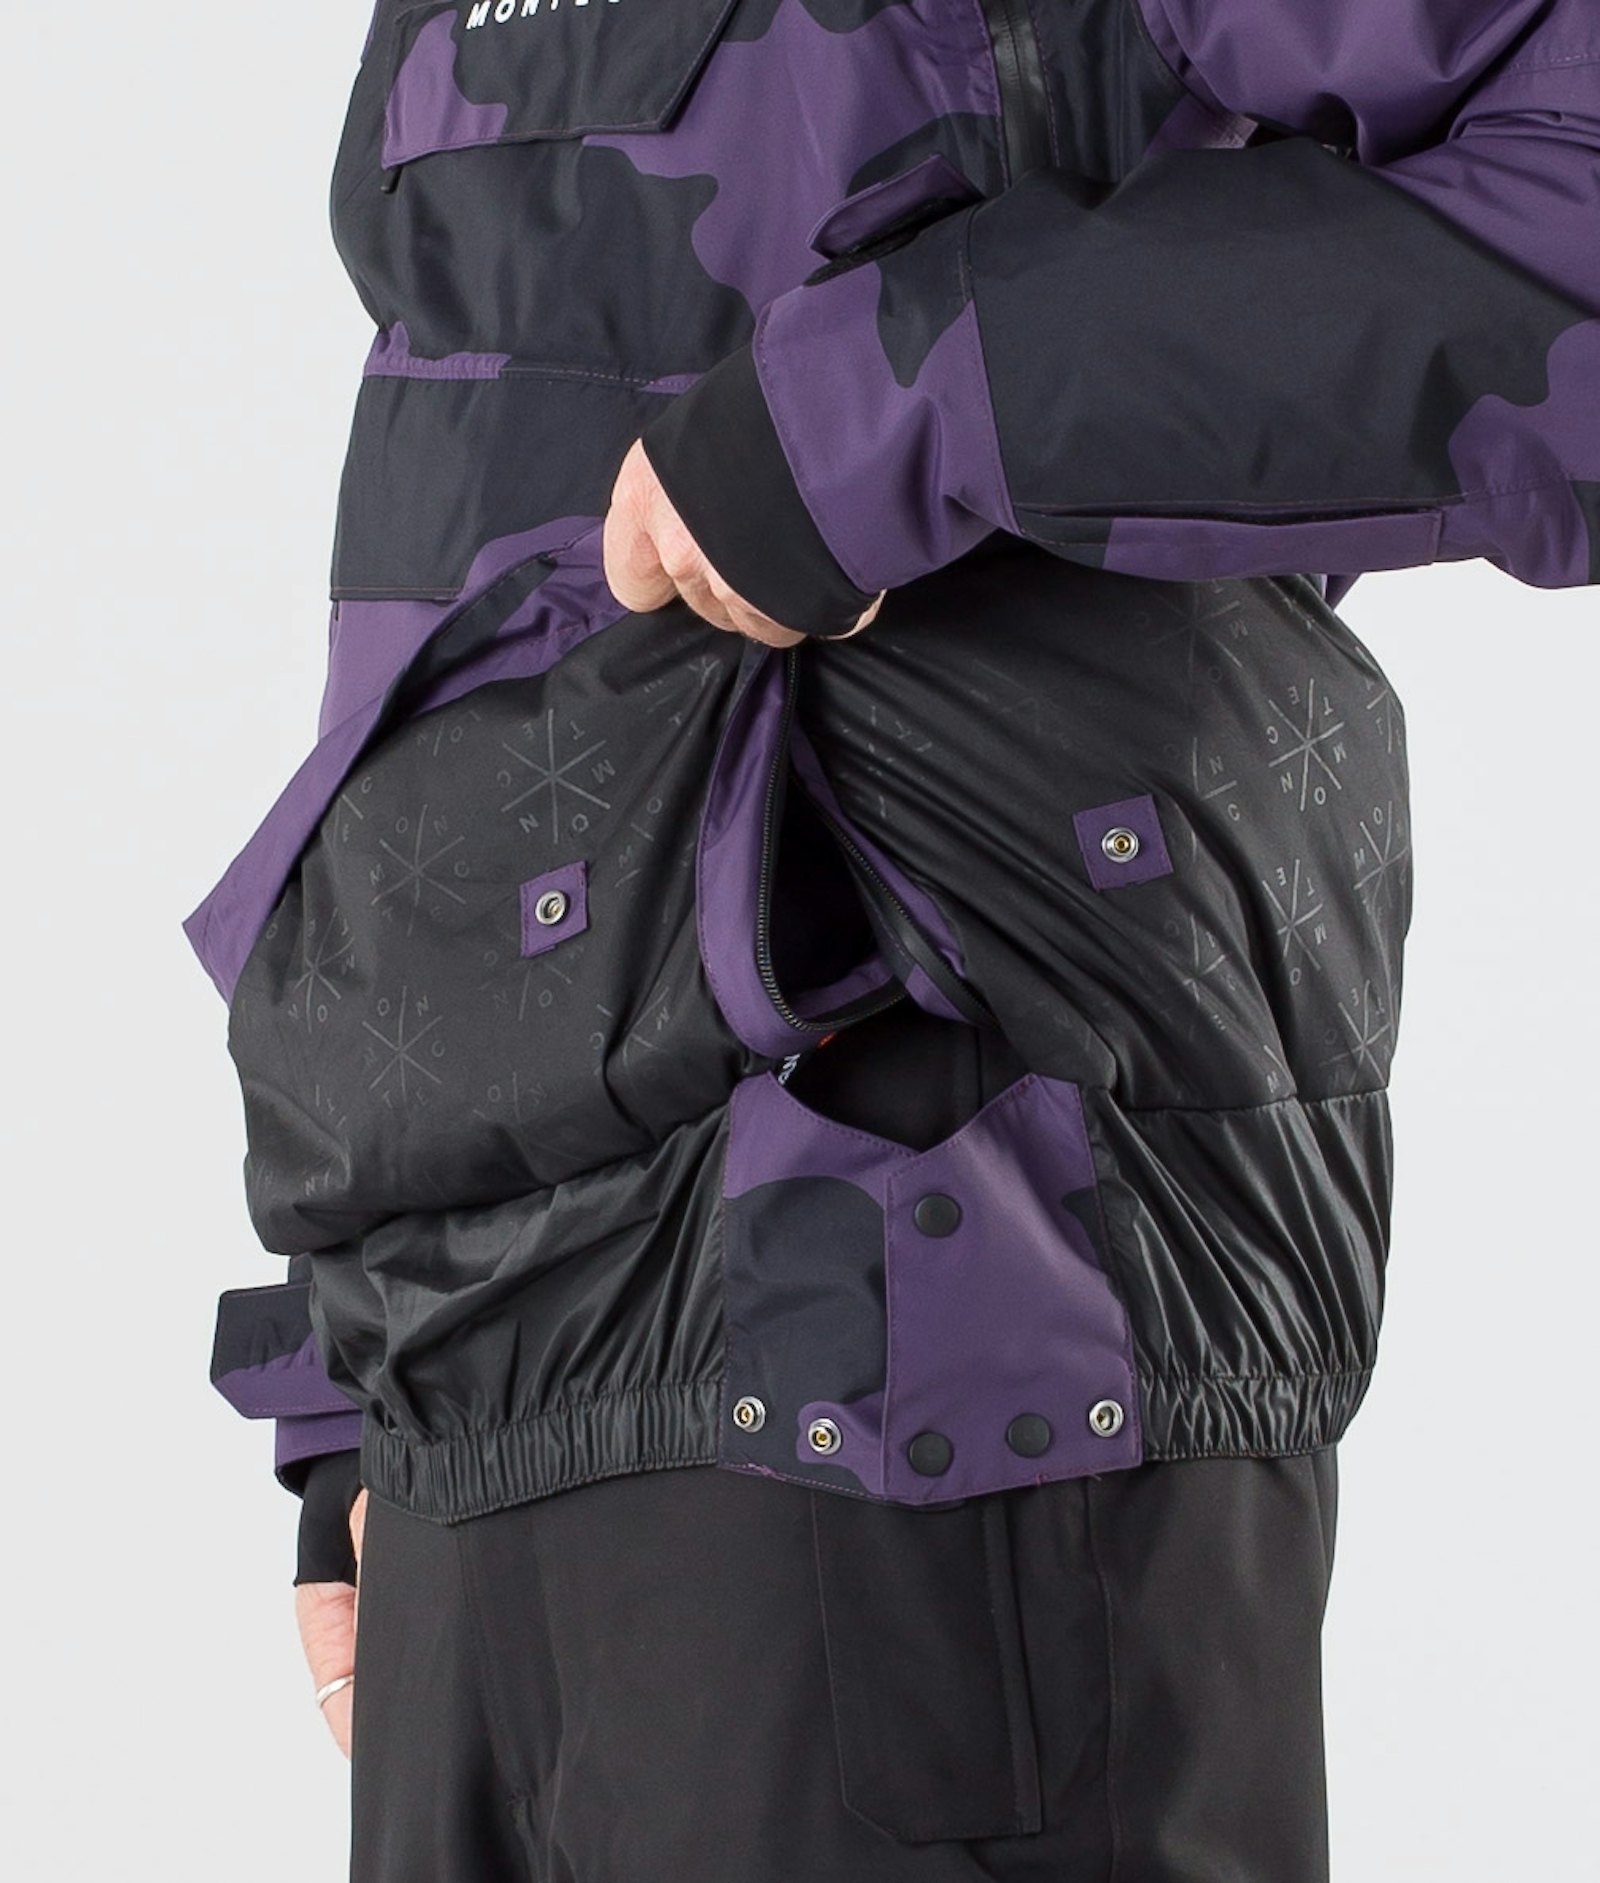 Doom 2019 Snowboard Jacket Men Grape Camo